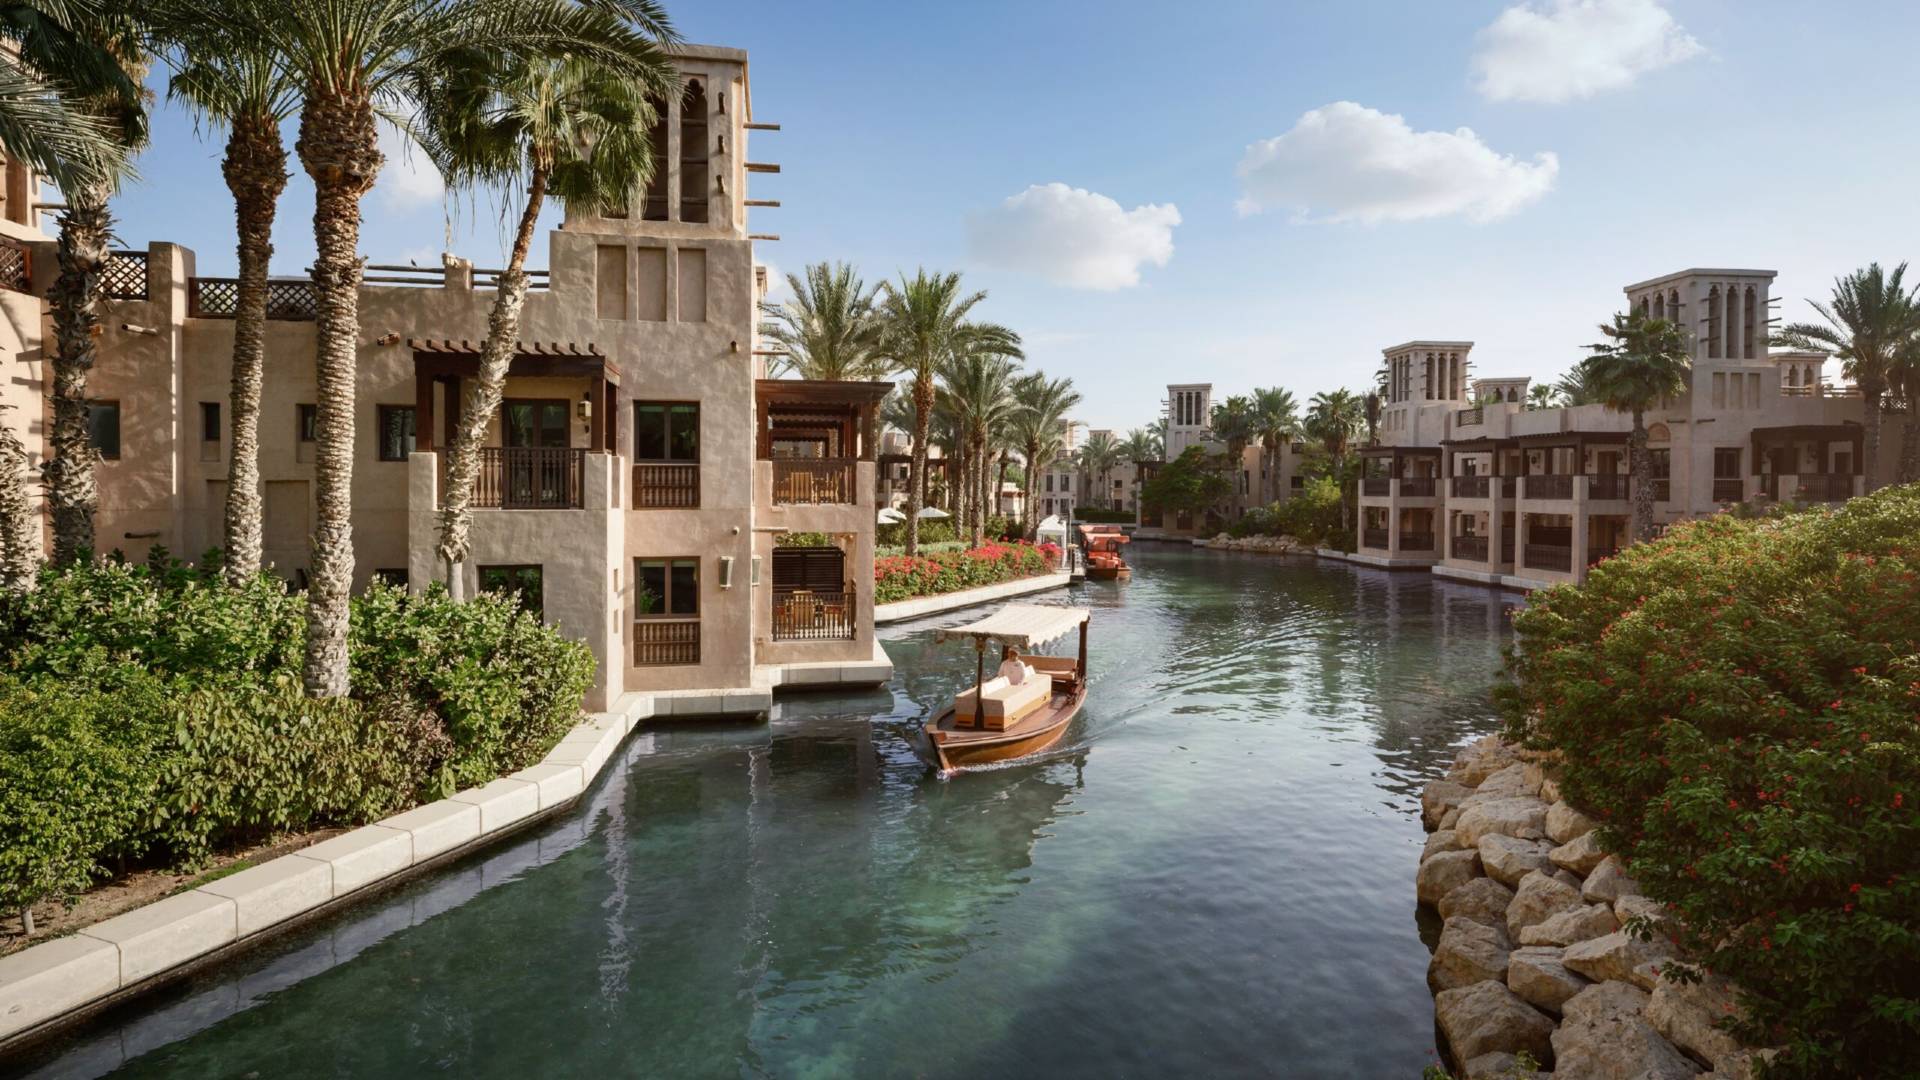 The serene waterways at Madinat Jumeirah